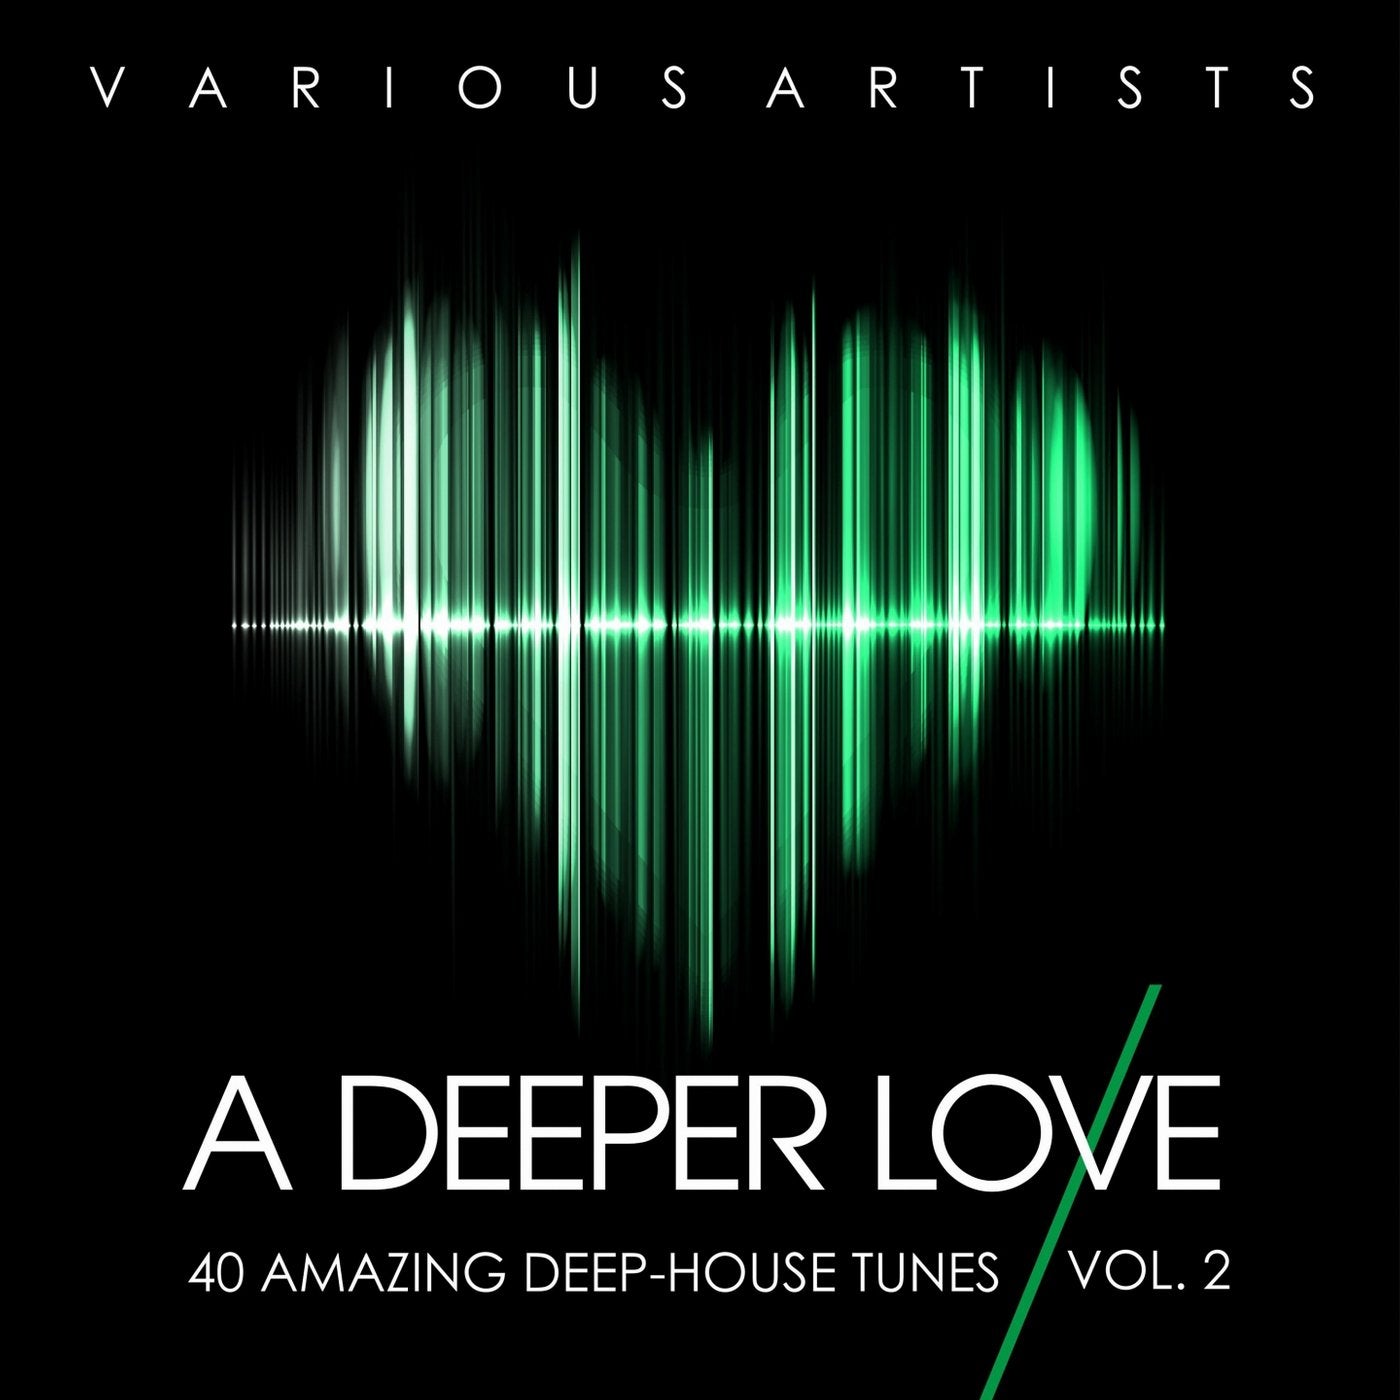 A Deeper Love, Vol. 2 (40 Amazing Deep-House Tunes)